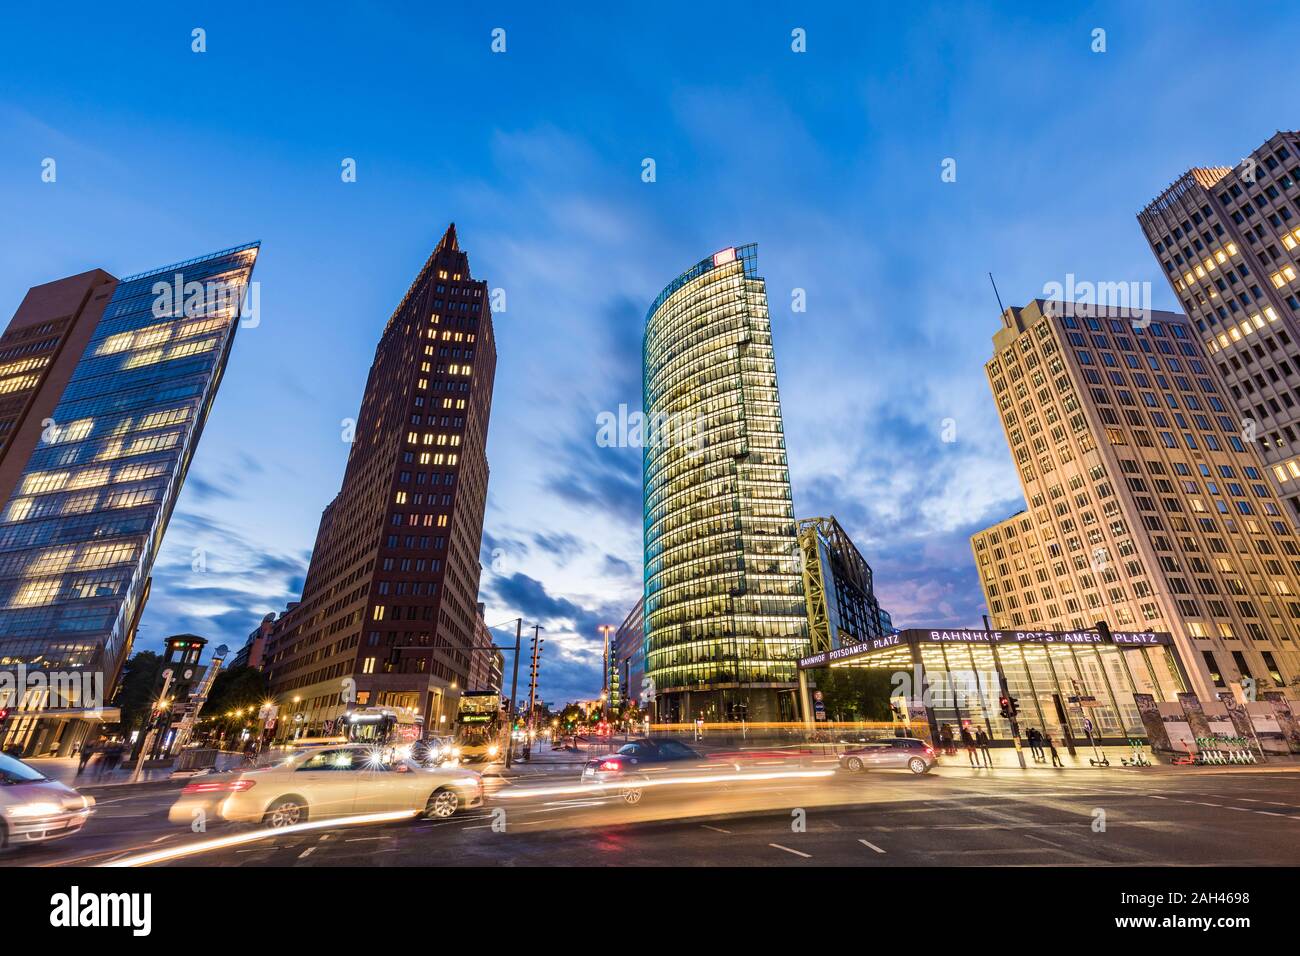 Germania, Berlino Mitte, Potsdamer Platz, Kollhoff-Tower, Bahntower, Beisheim-Center, il traffico su strada Foto Stock